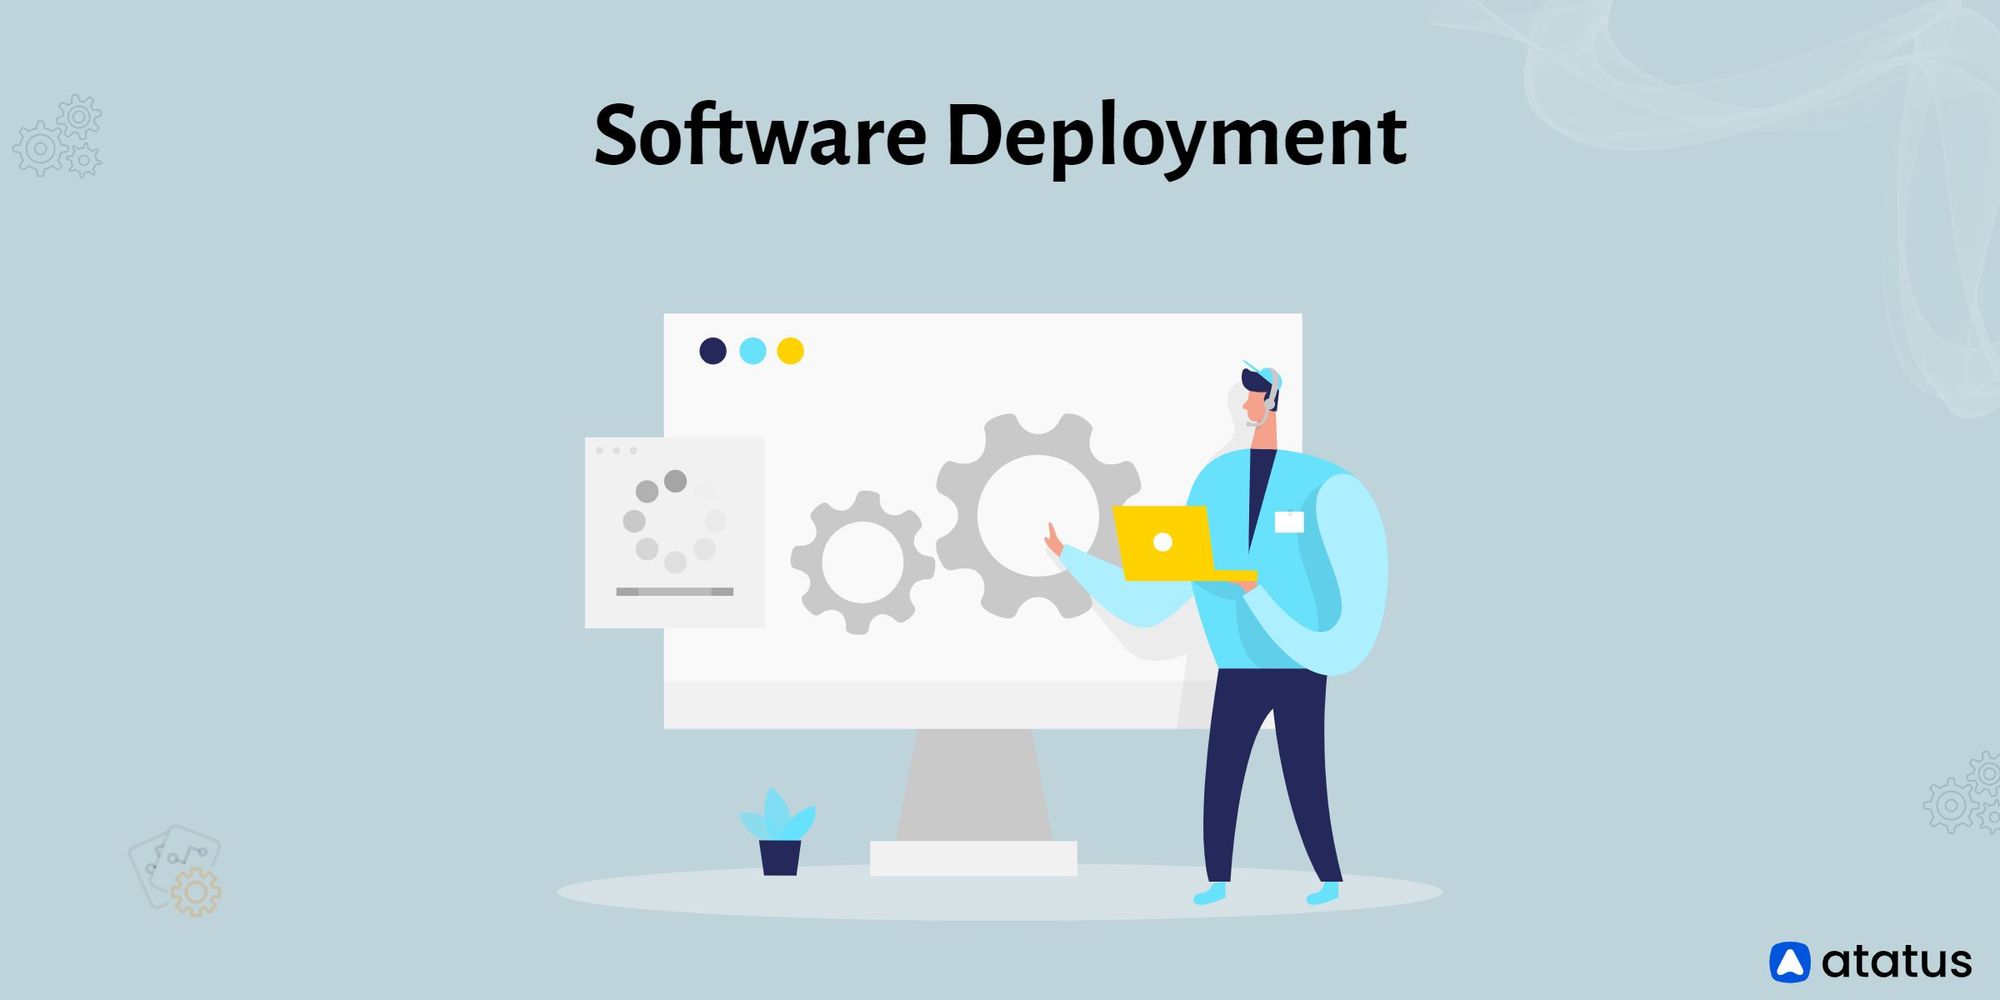 Software deployment